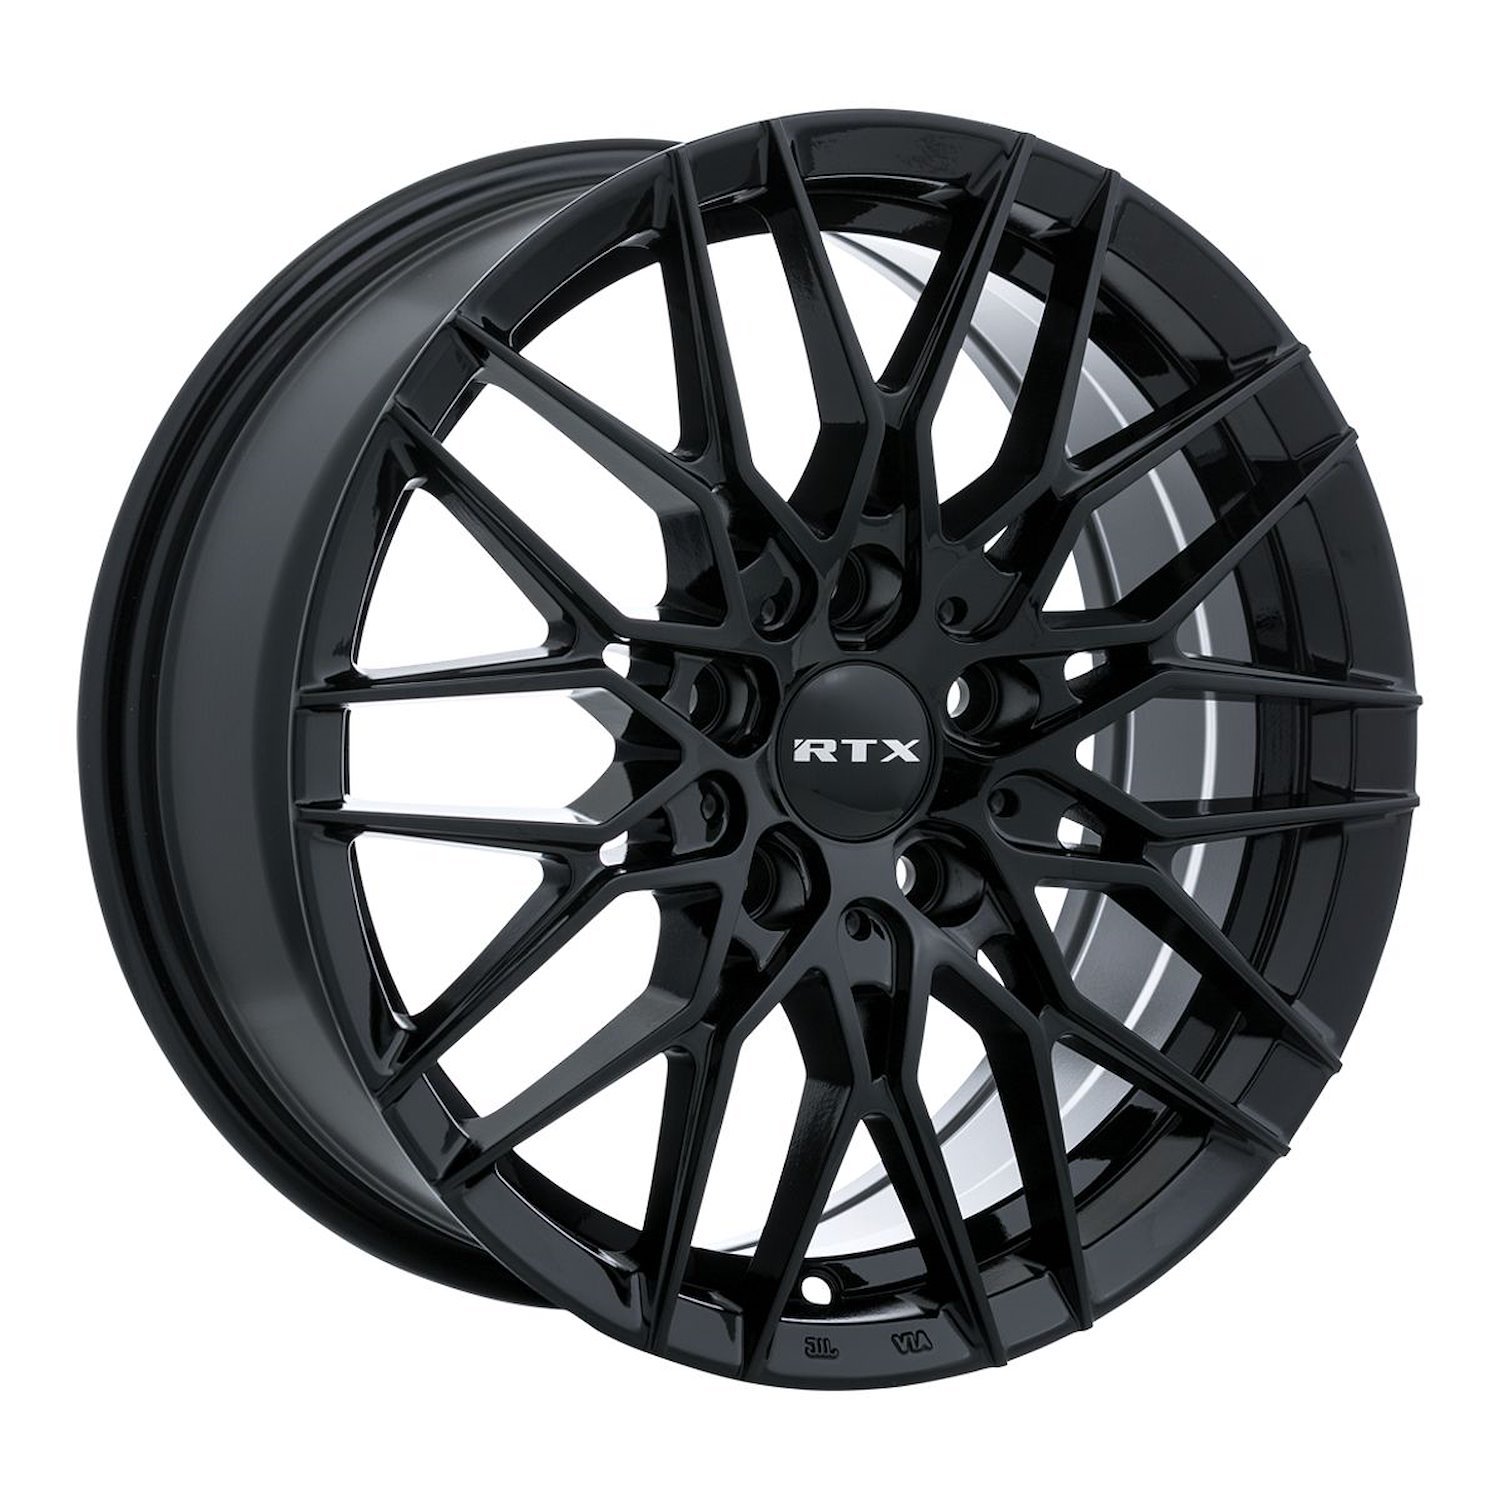 082939 RTX-Series V20 Wheel [Size: 18" x 8"] Gloss Black Finish